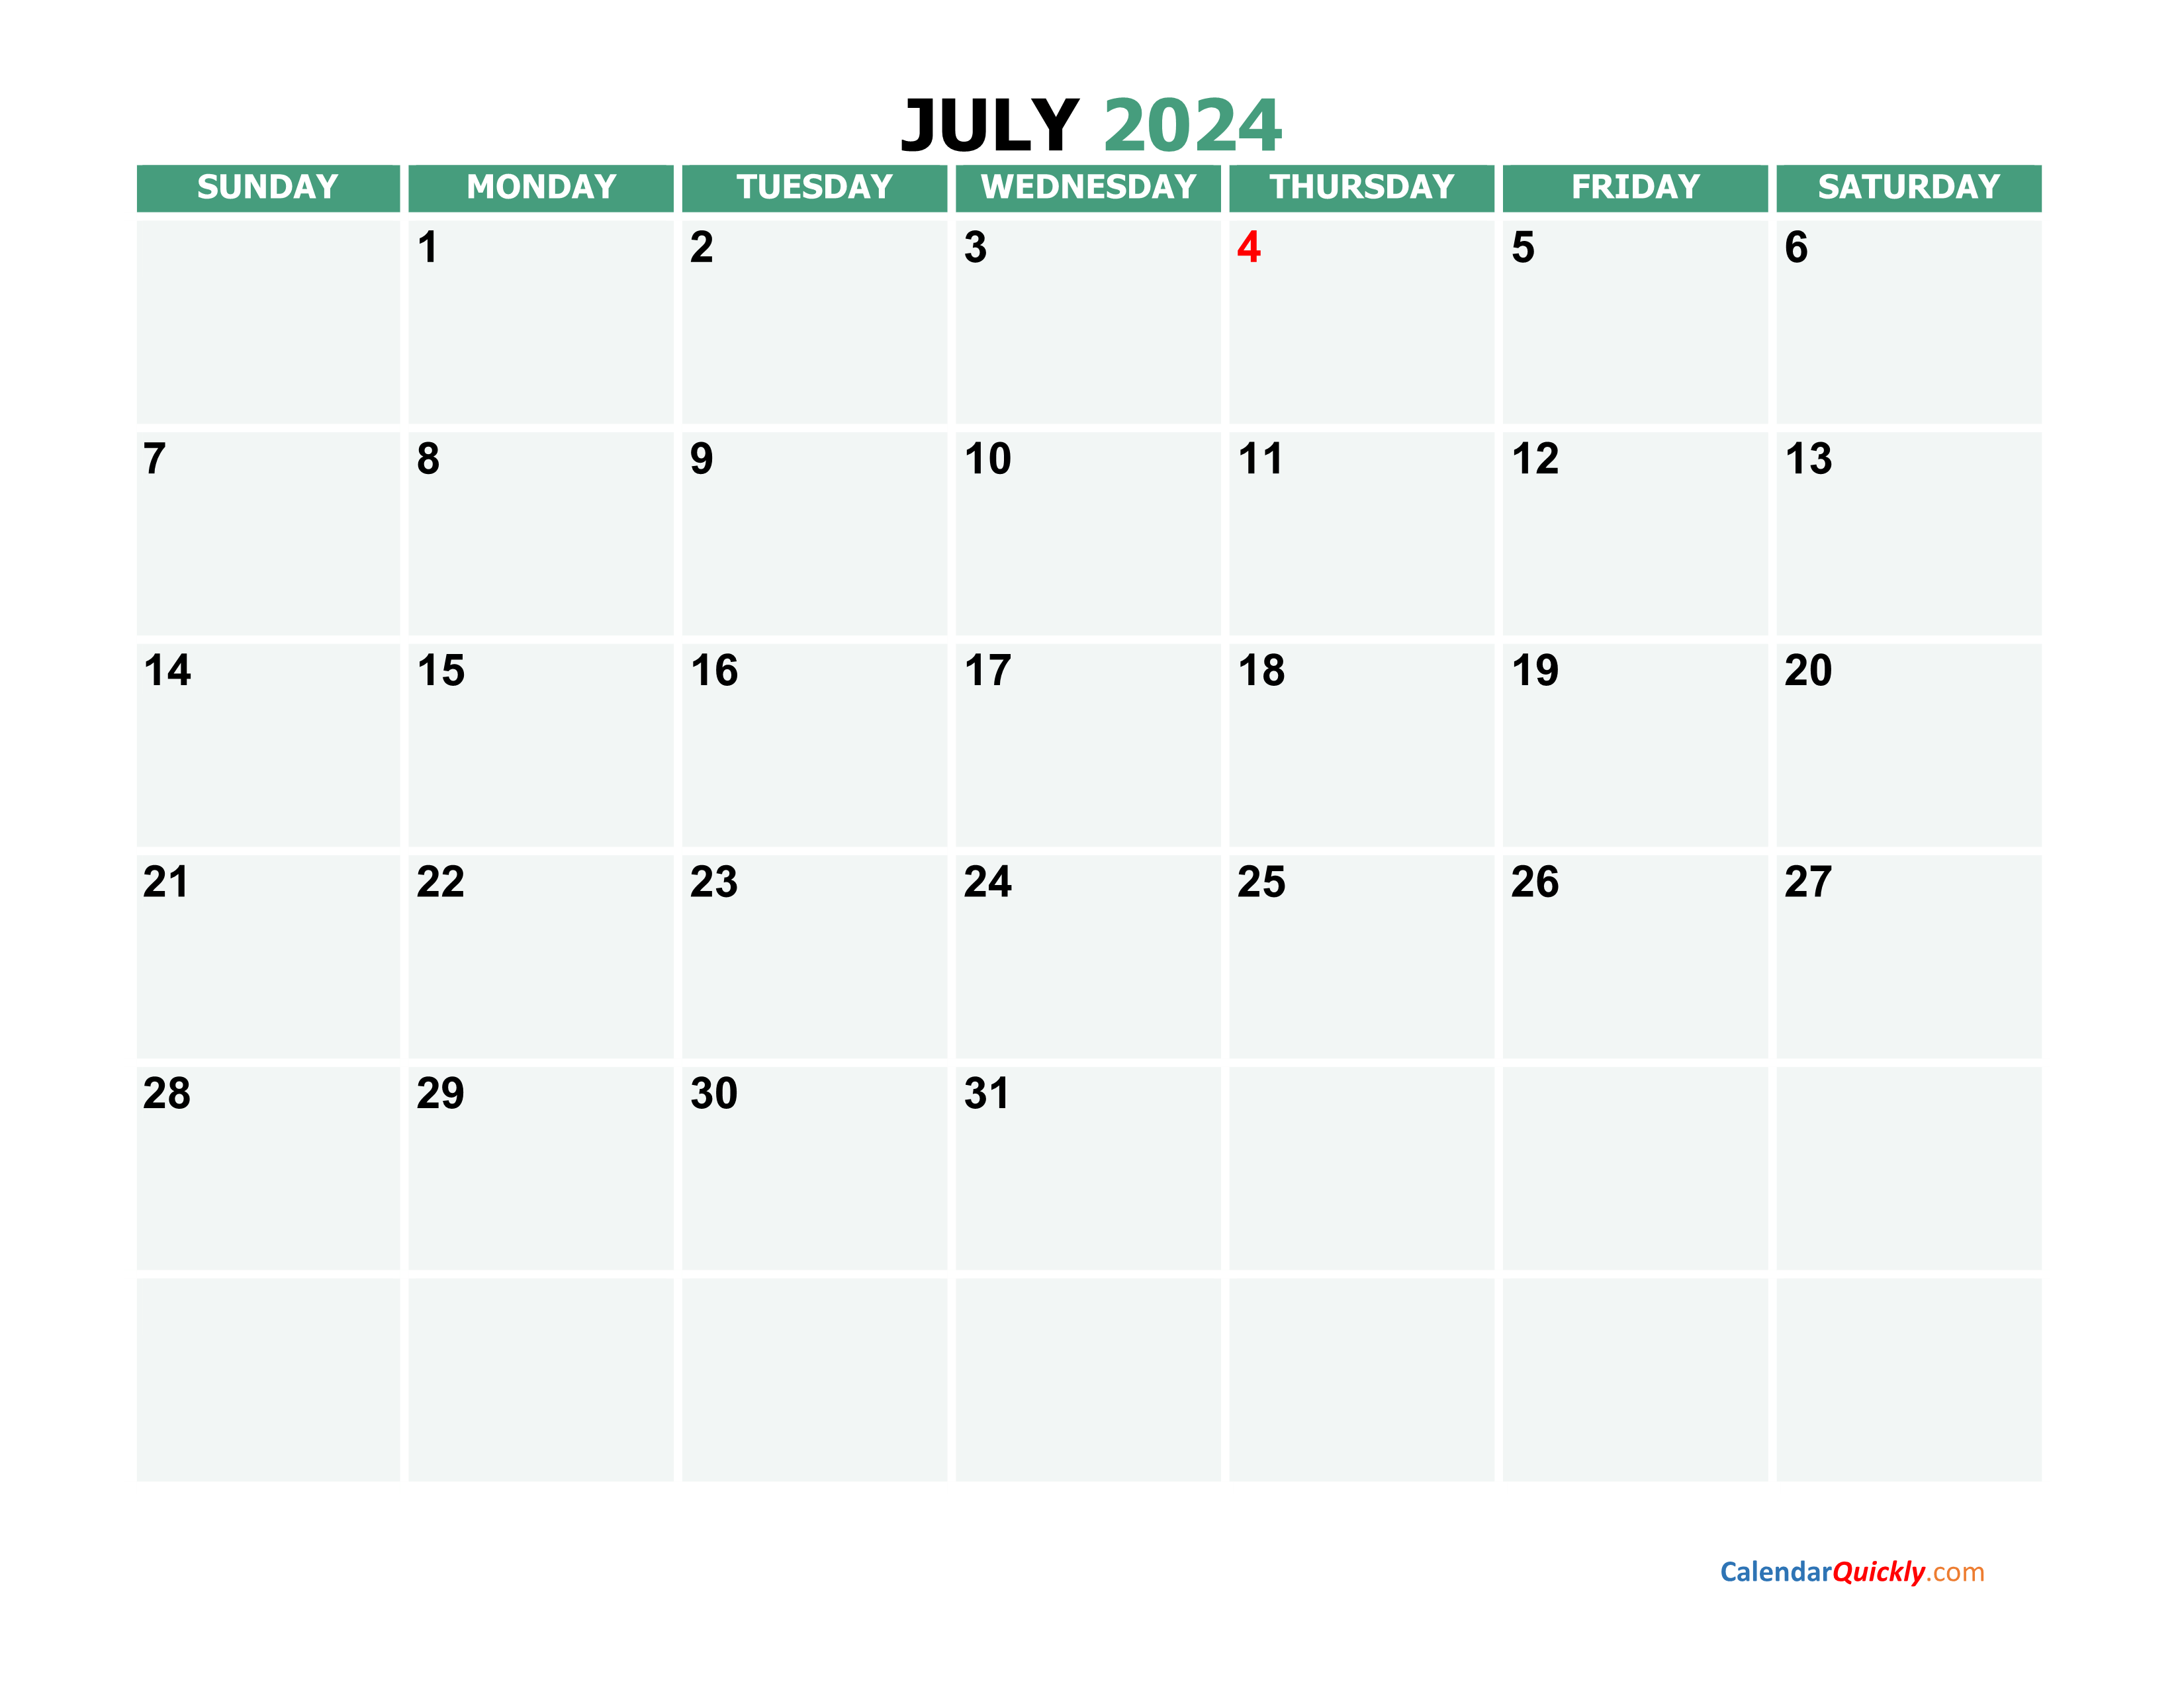 July 2024 Printable Calendar | Calendar Quickly